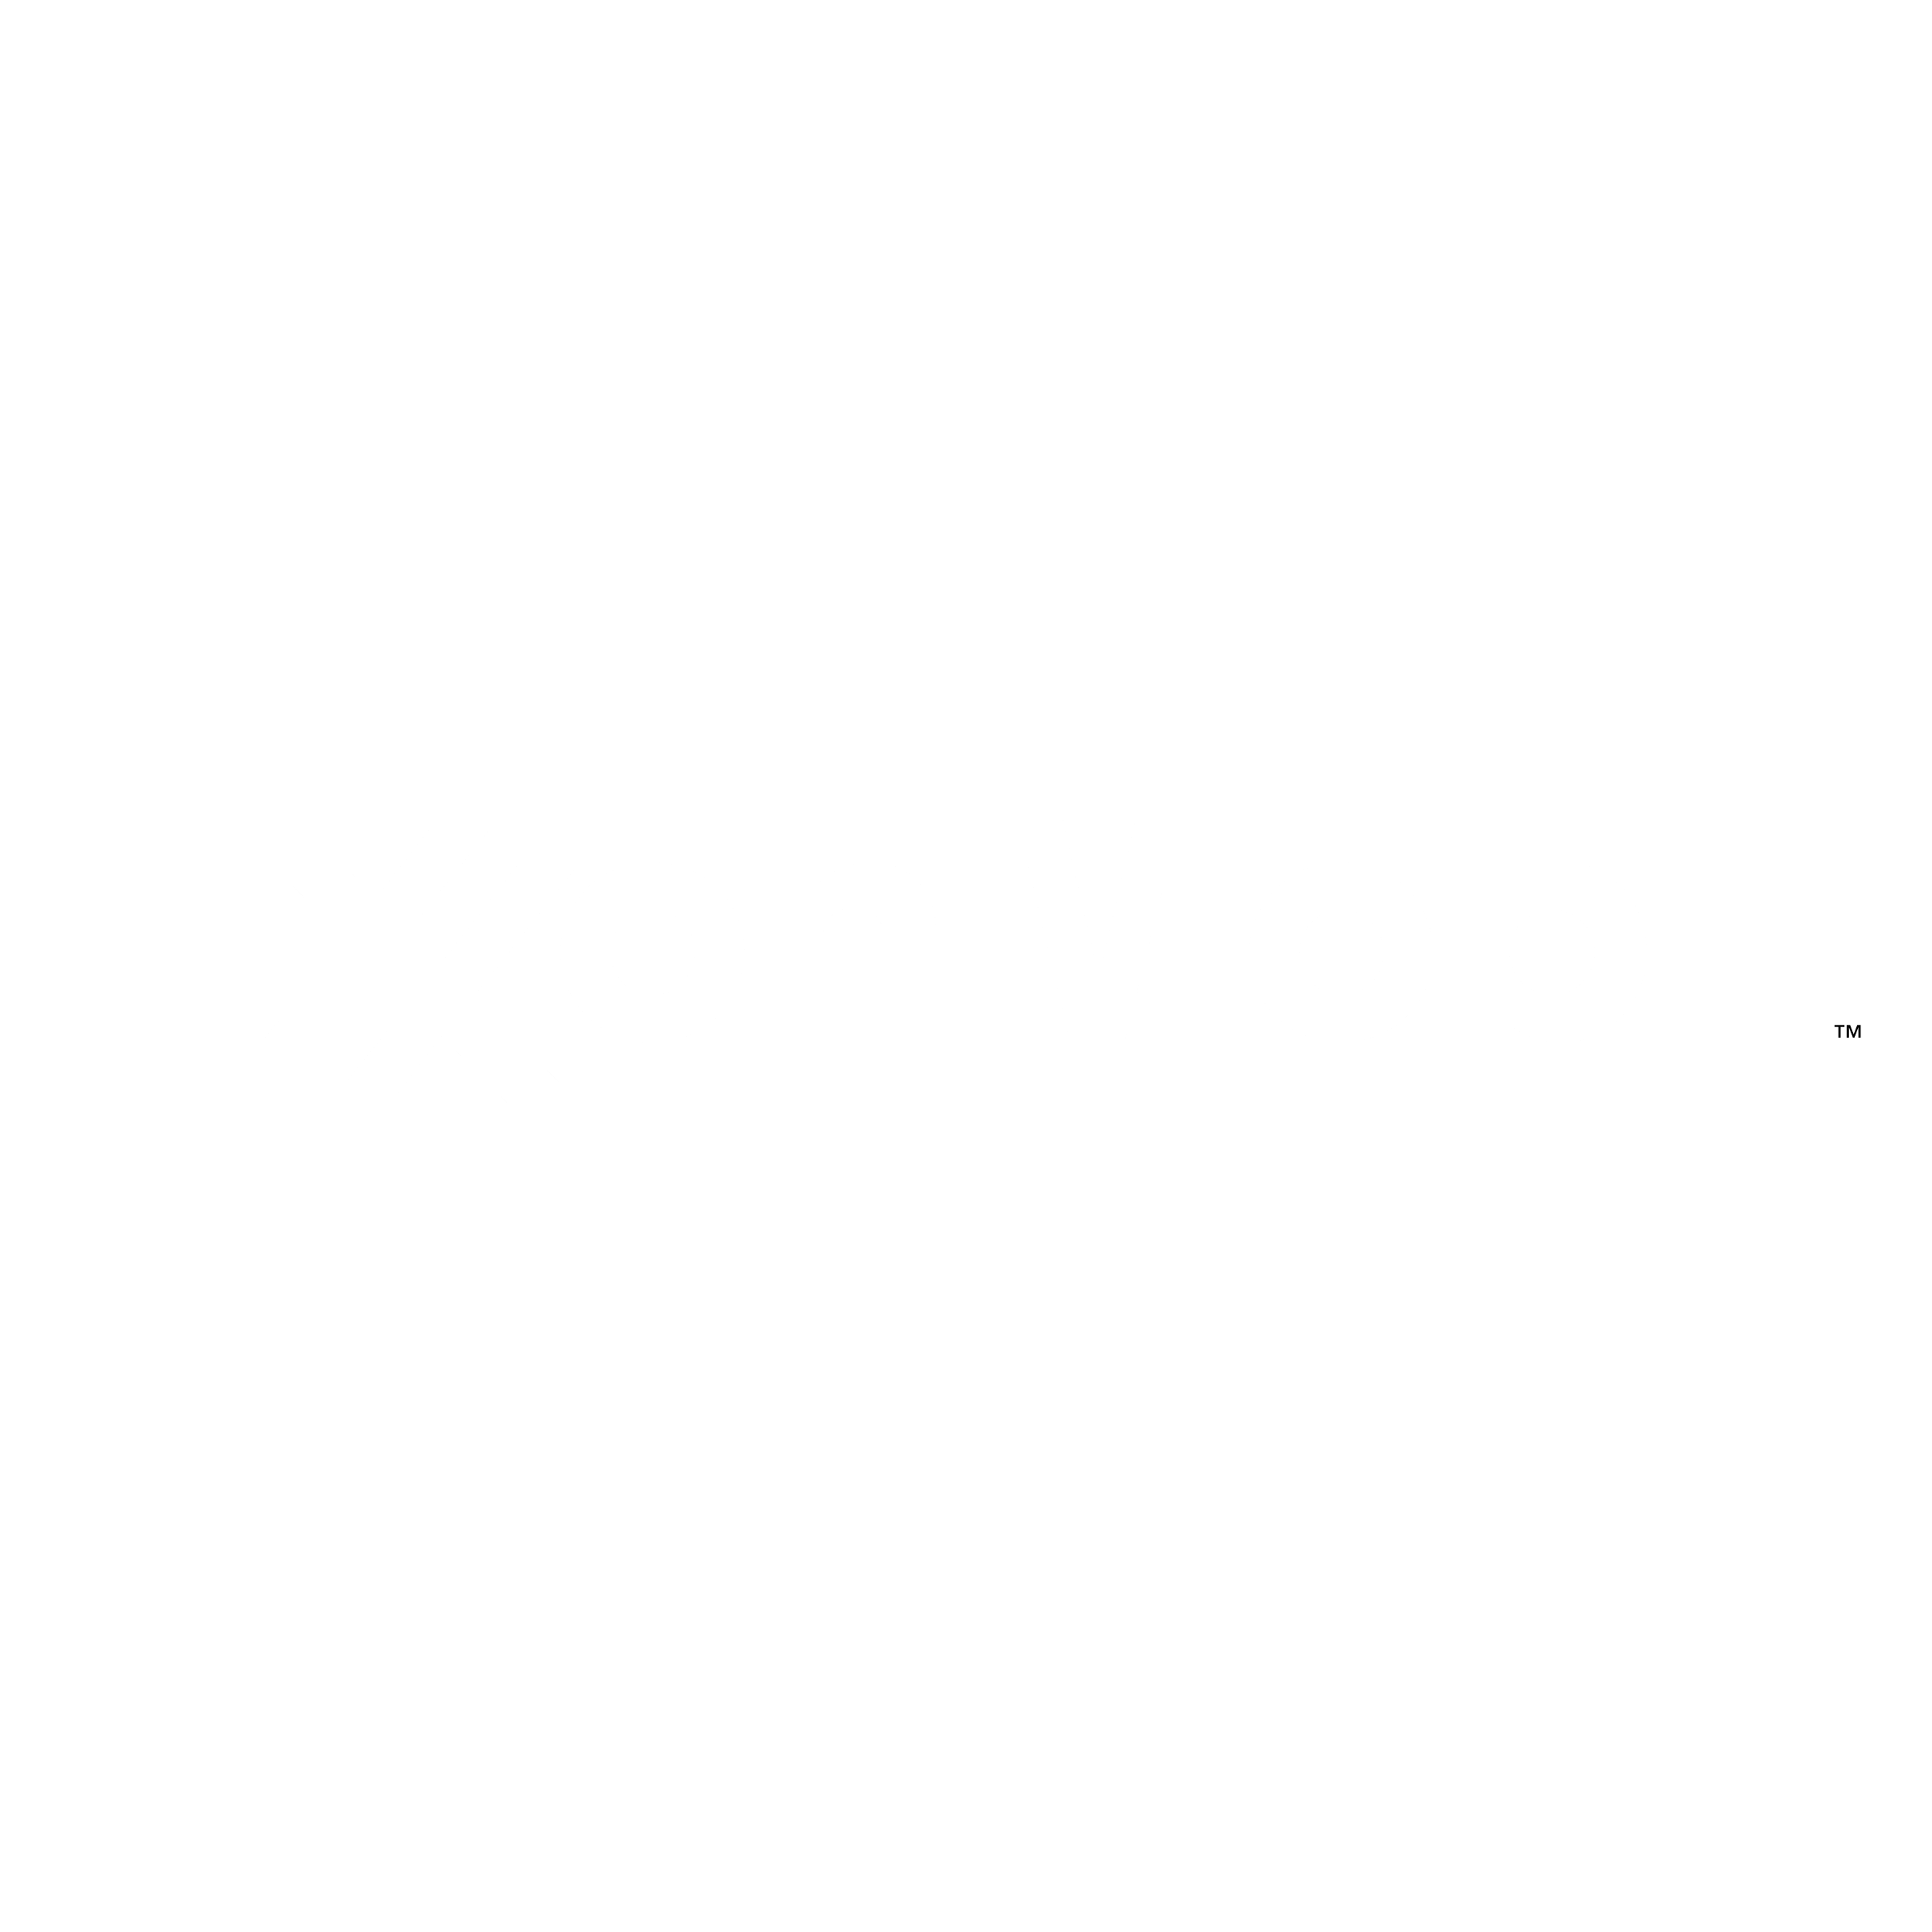 Black and White Mobil Logo - Exxon Mobil Logo PNG Transparent & SVG Vector - Freebie Supply